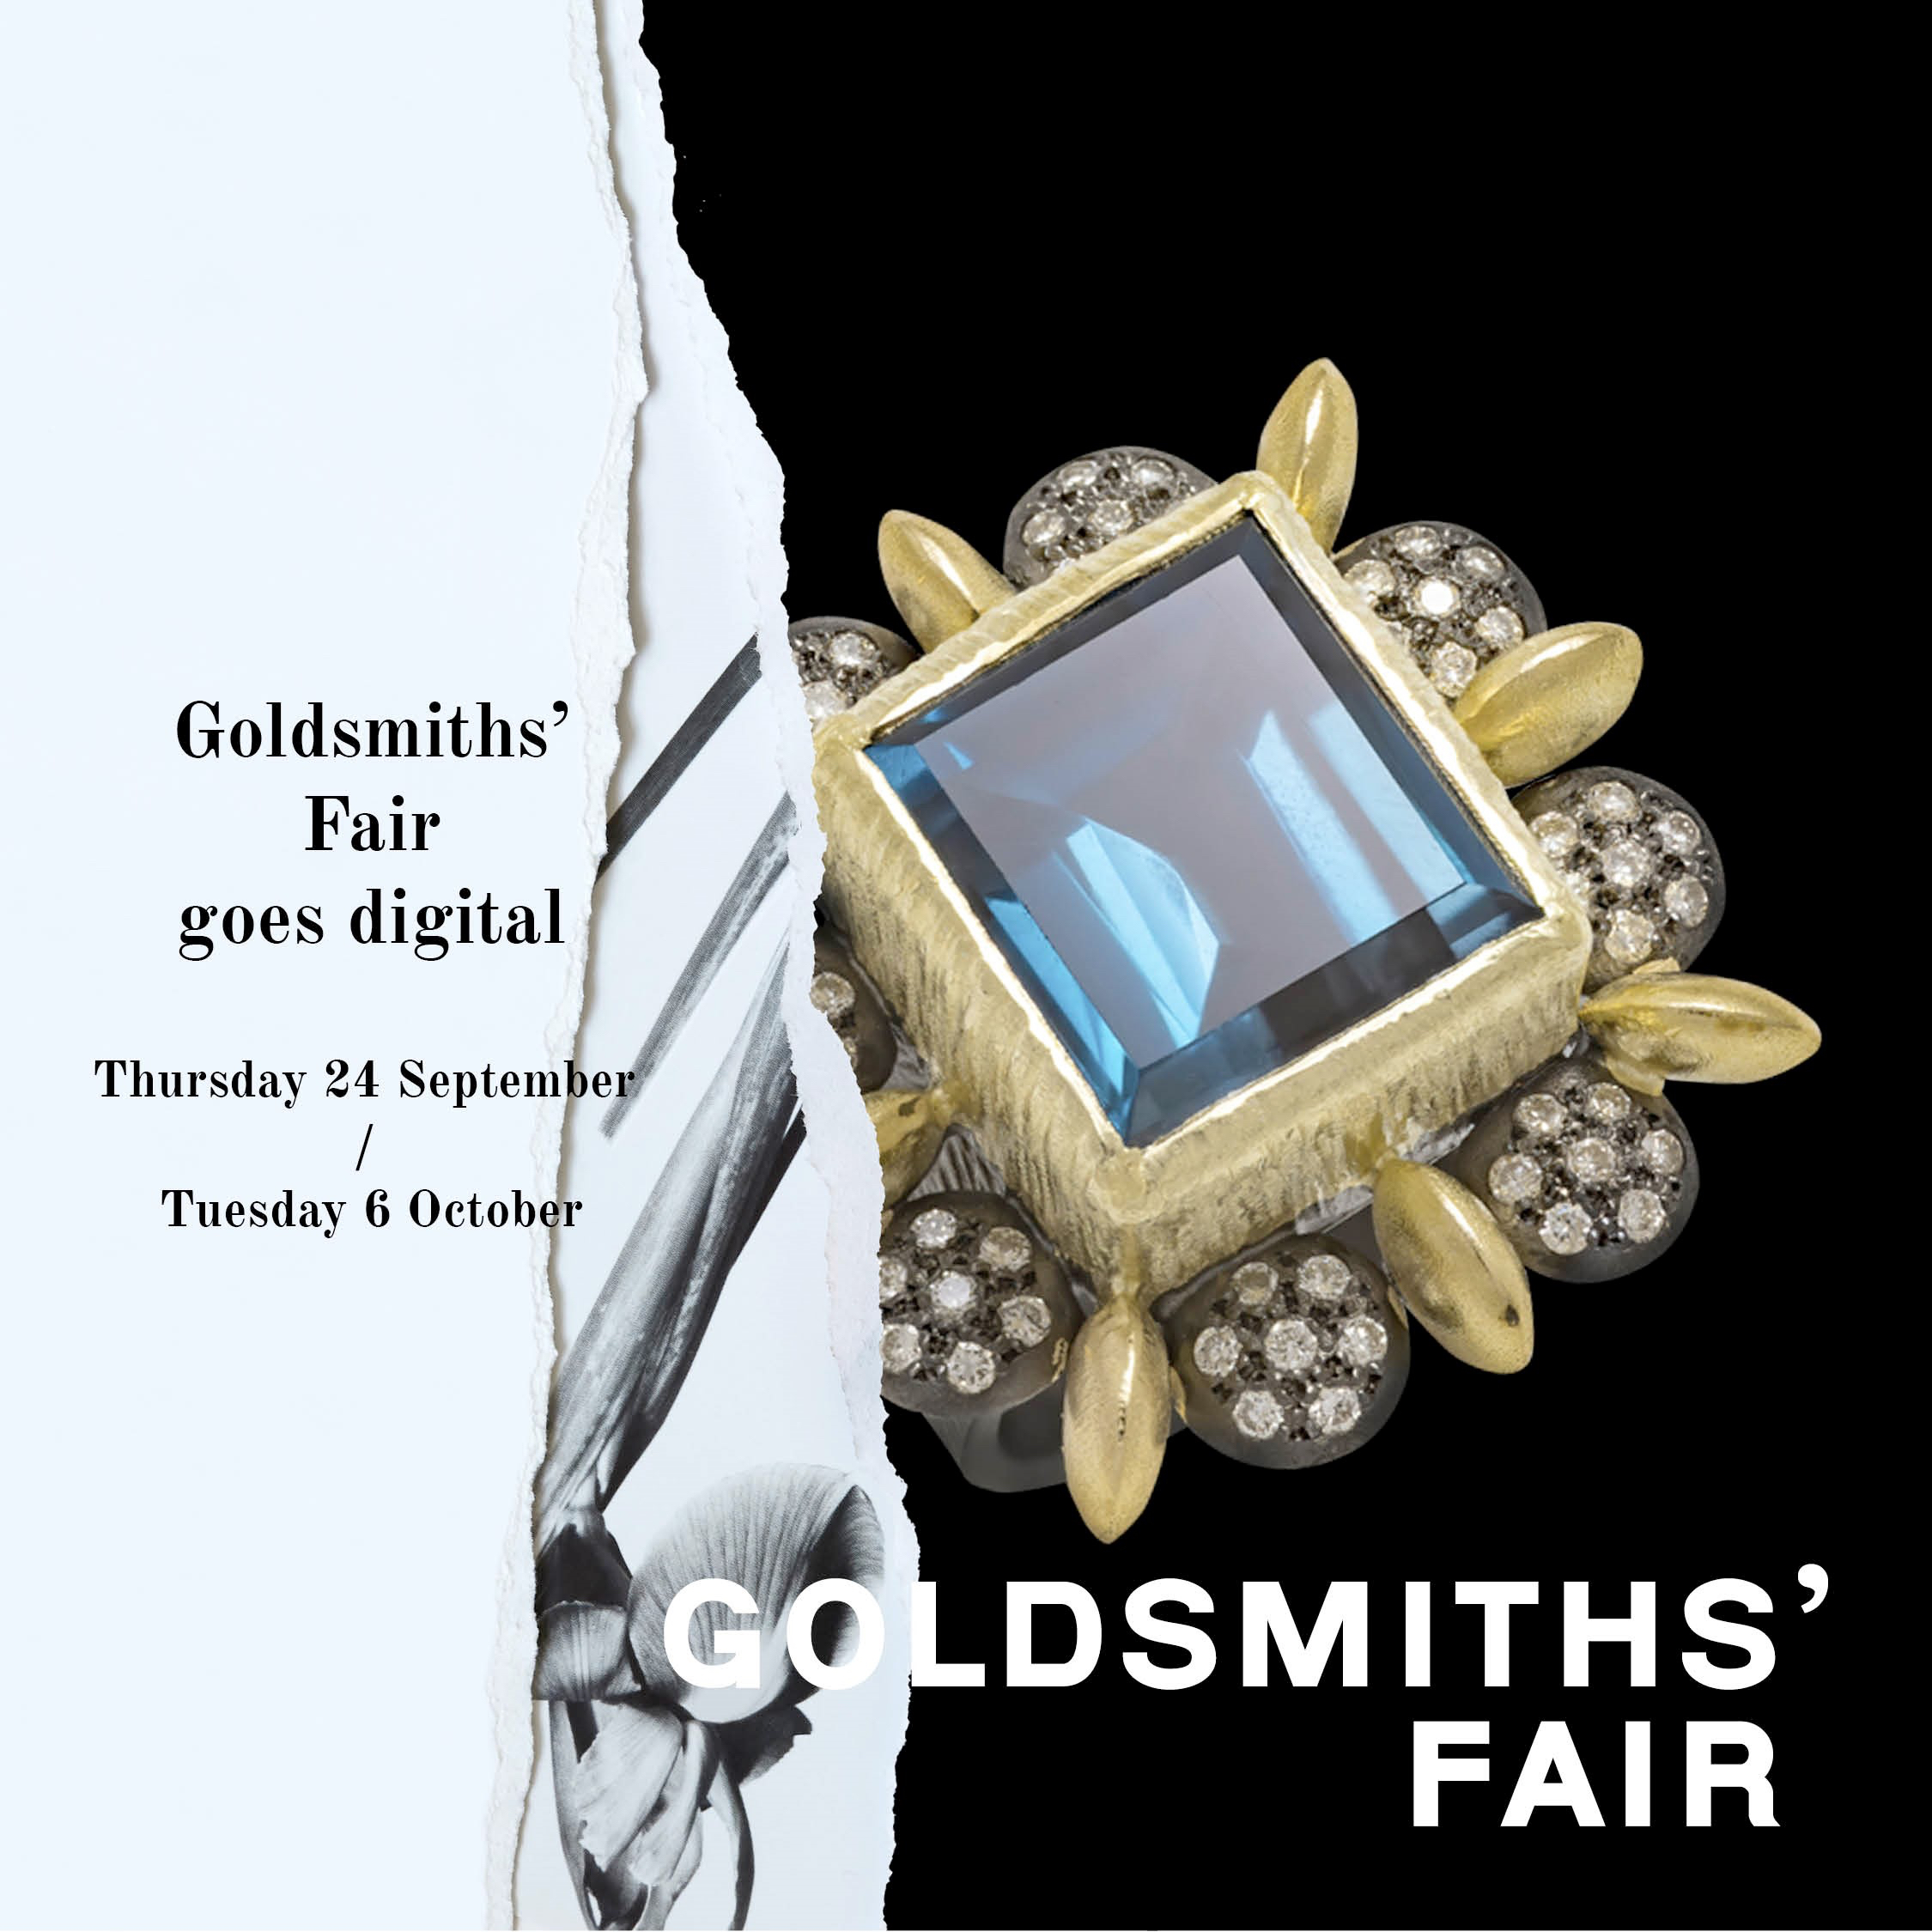 Disa goes digital with Goldsmiths’ Fair!